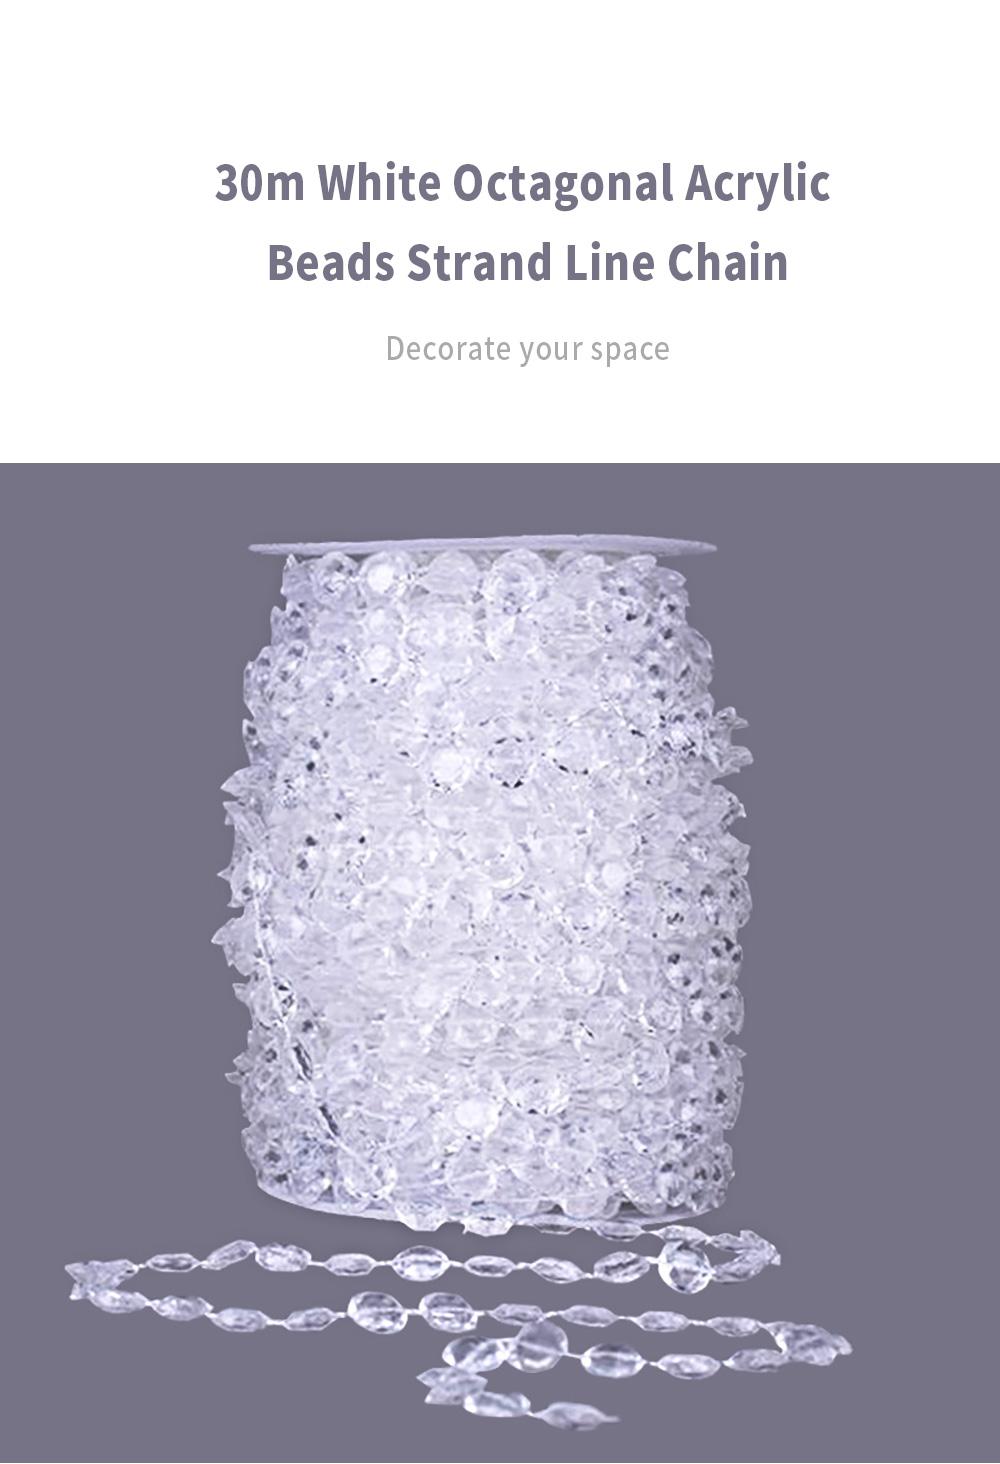 30m Octagonal Acrylic Beads Strand Line Chain